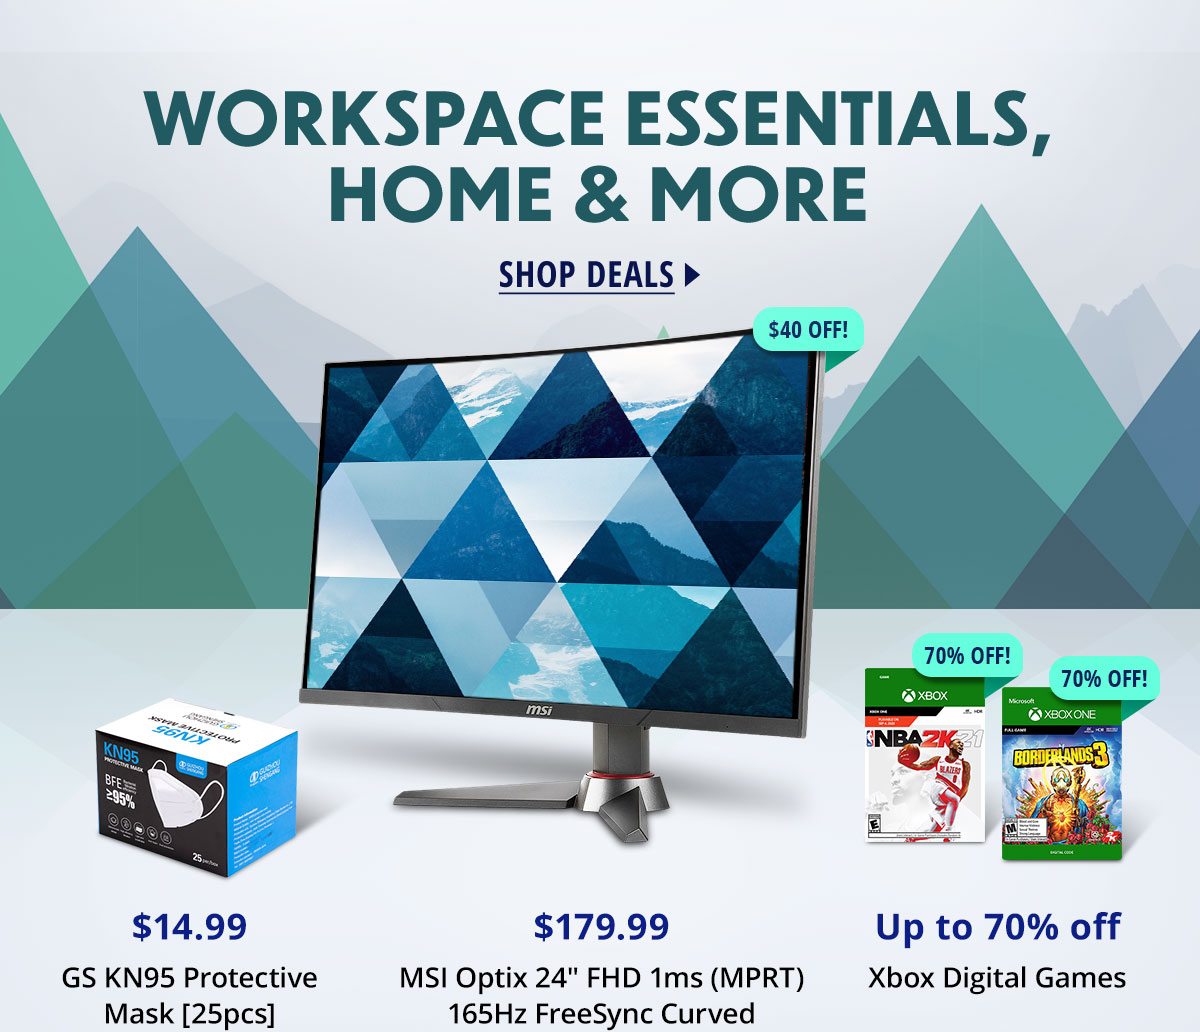 Workspace Essentials, Home & More